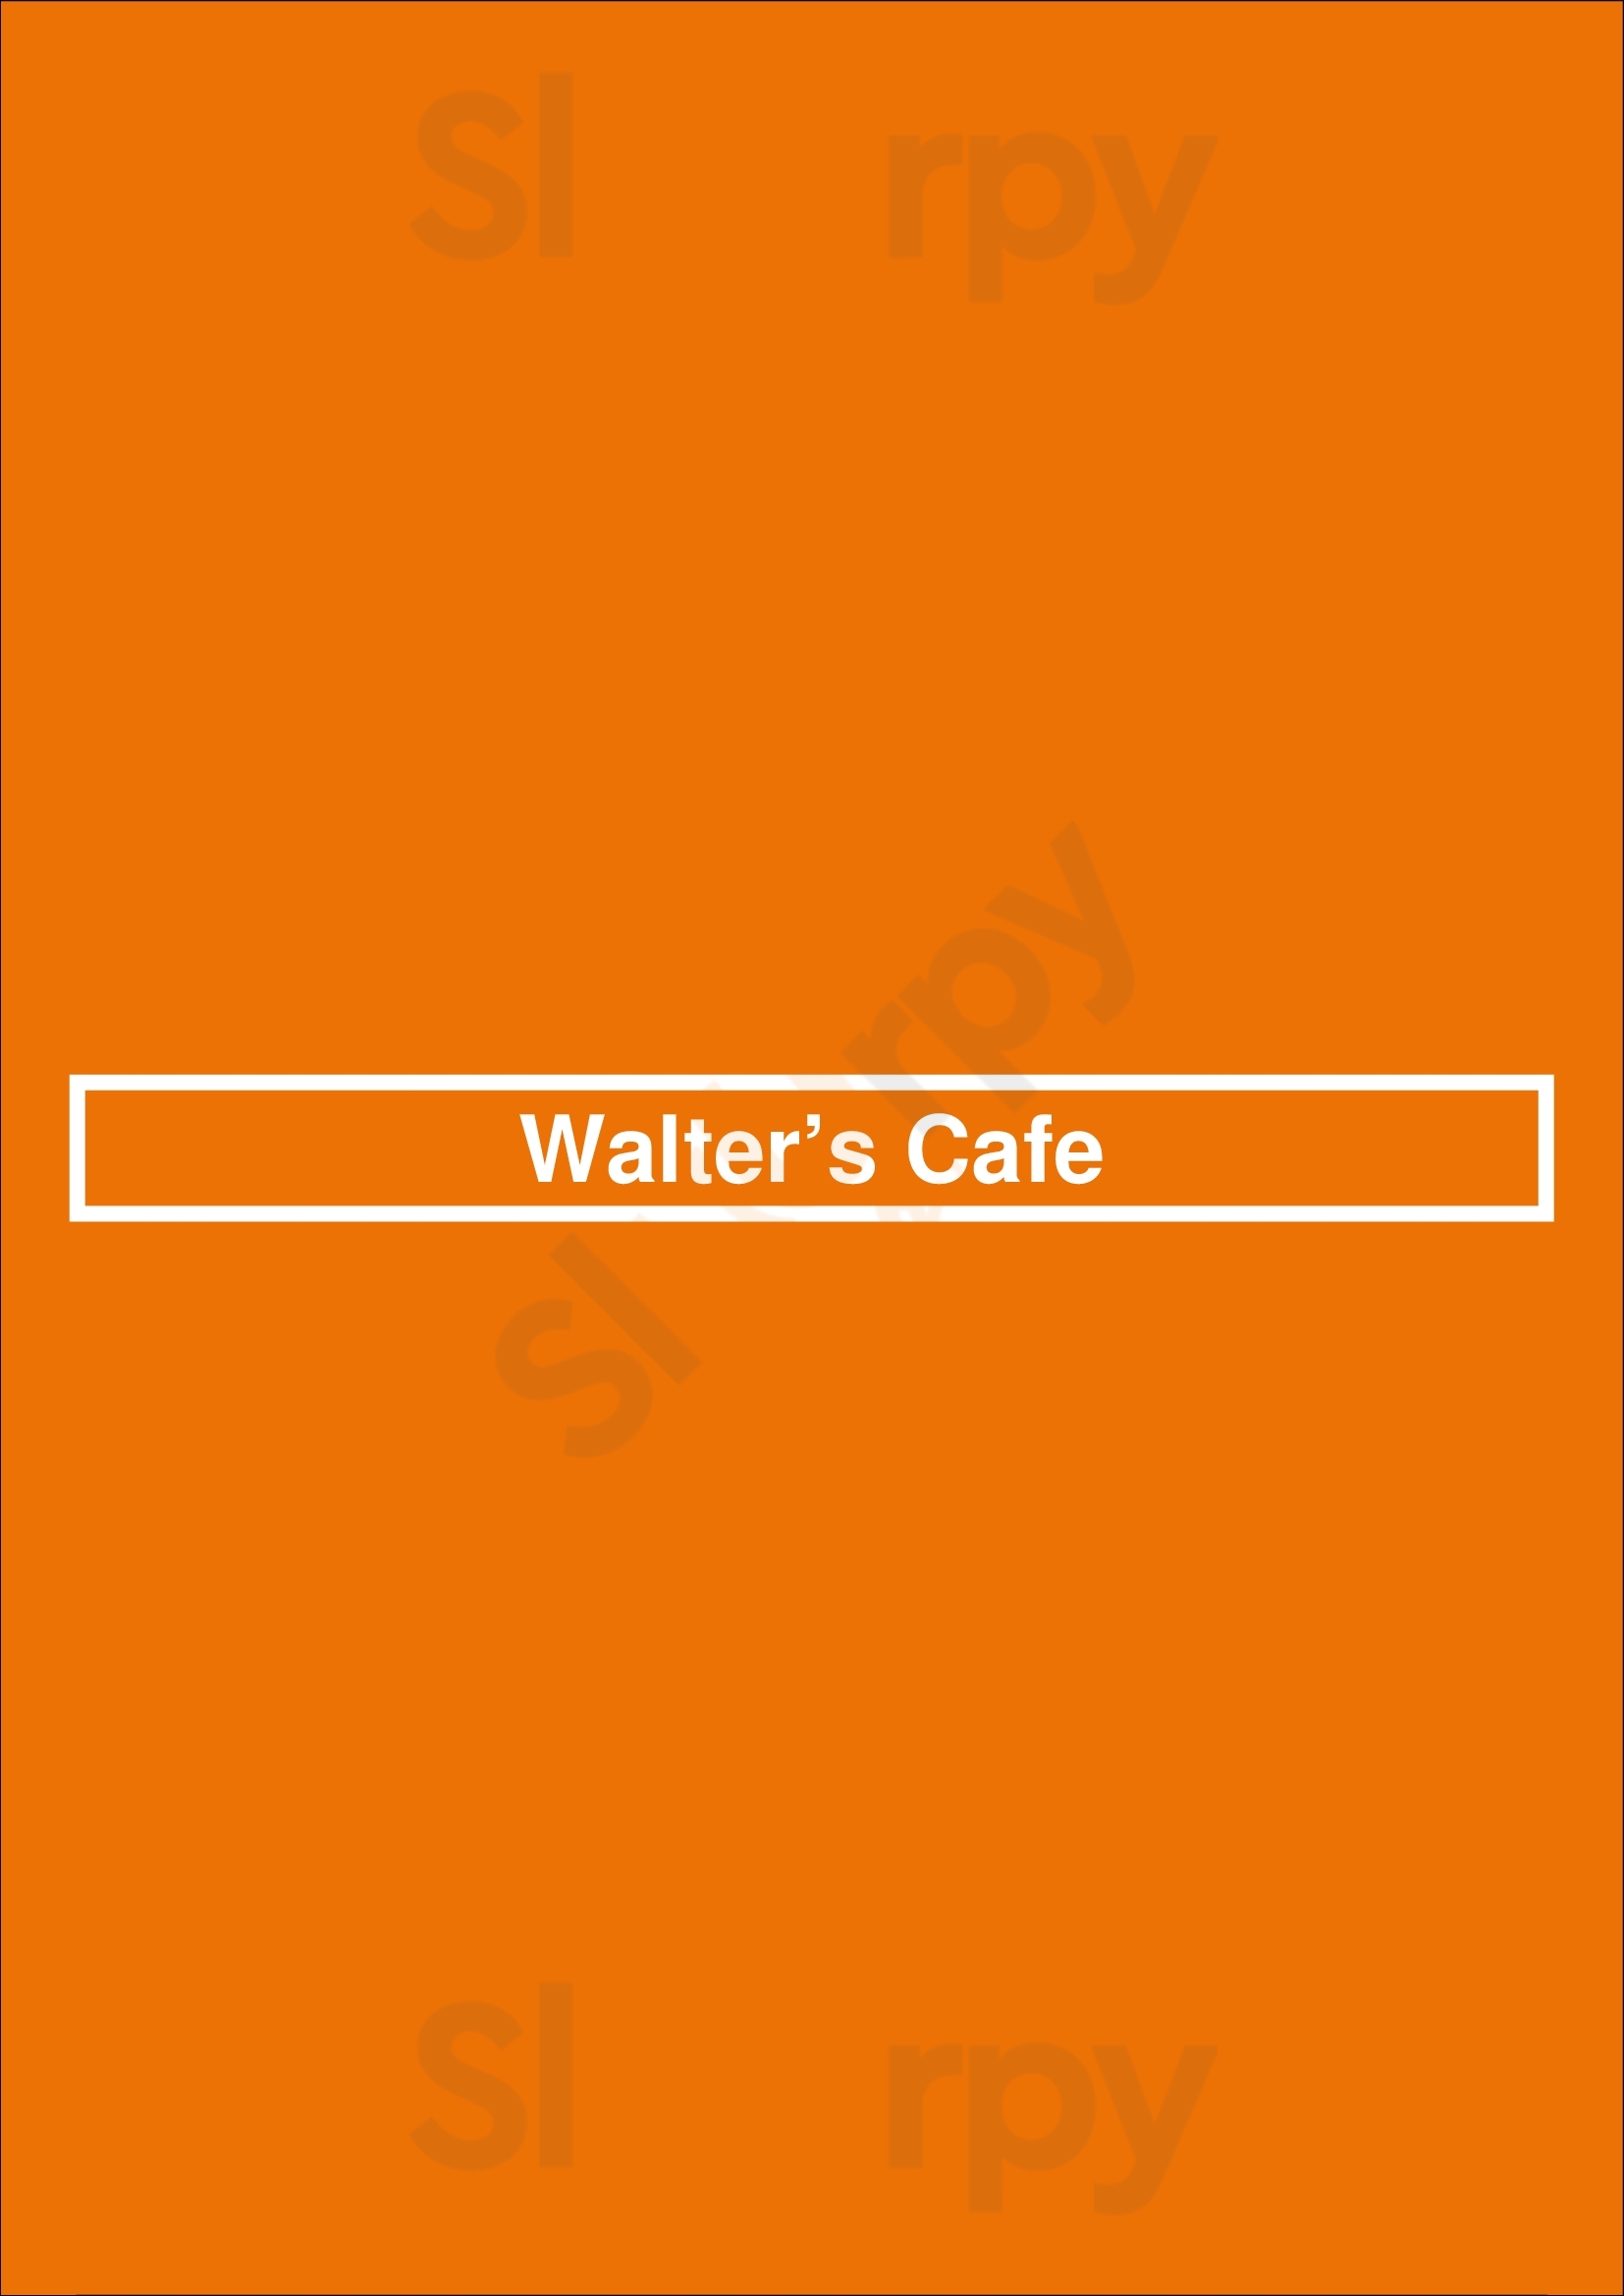 Walter’s Cafe Beverly Hills Menu - 1